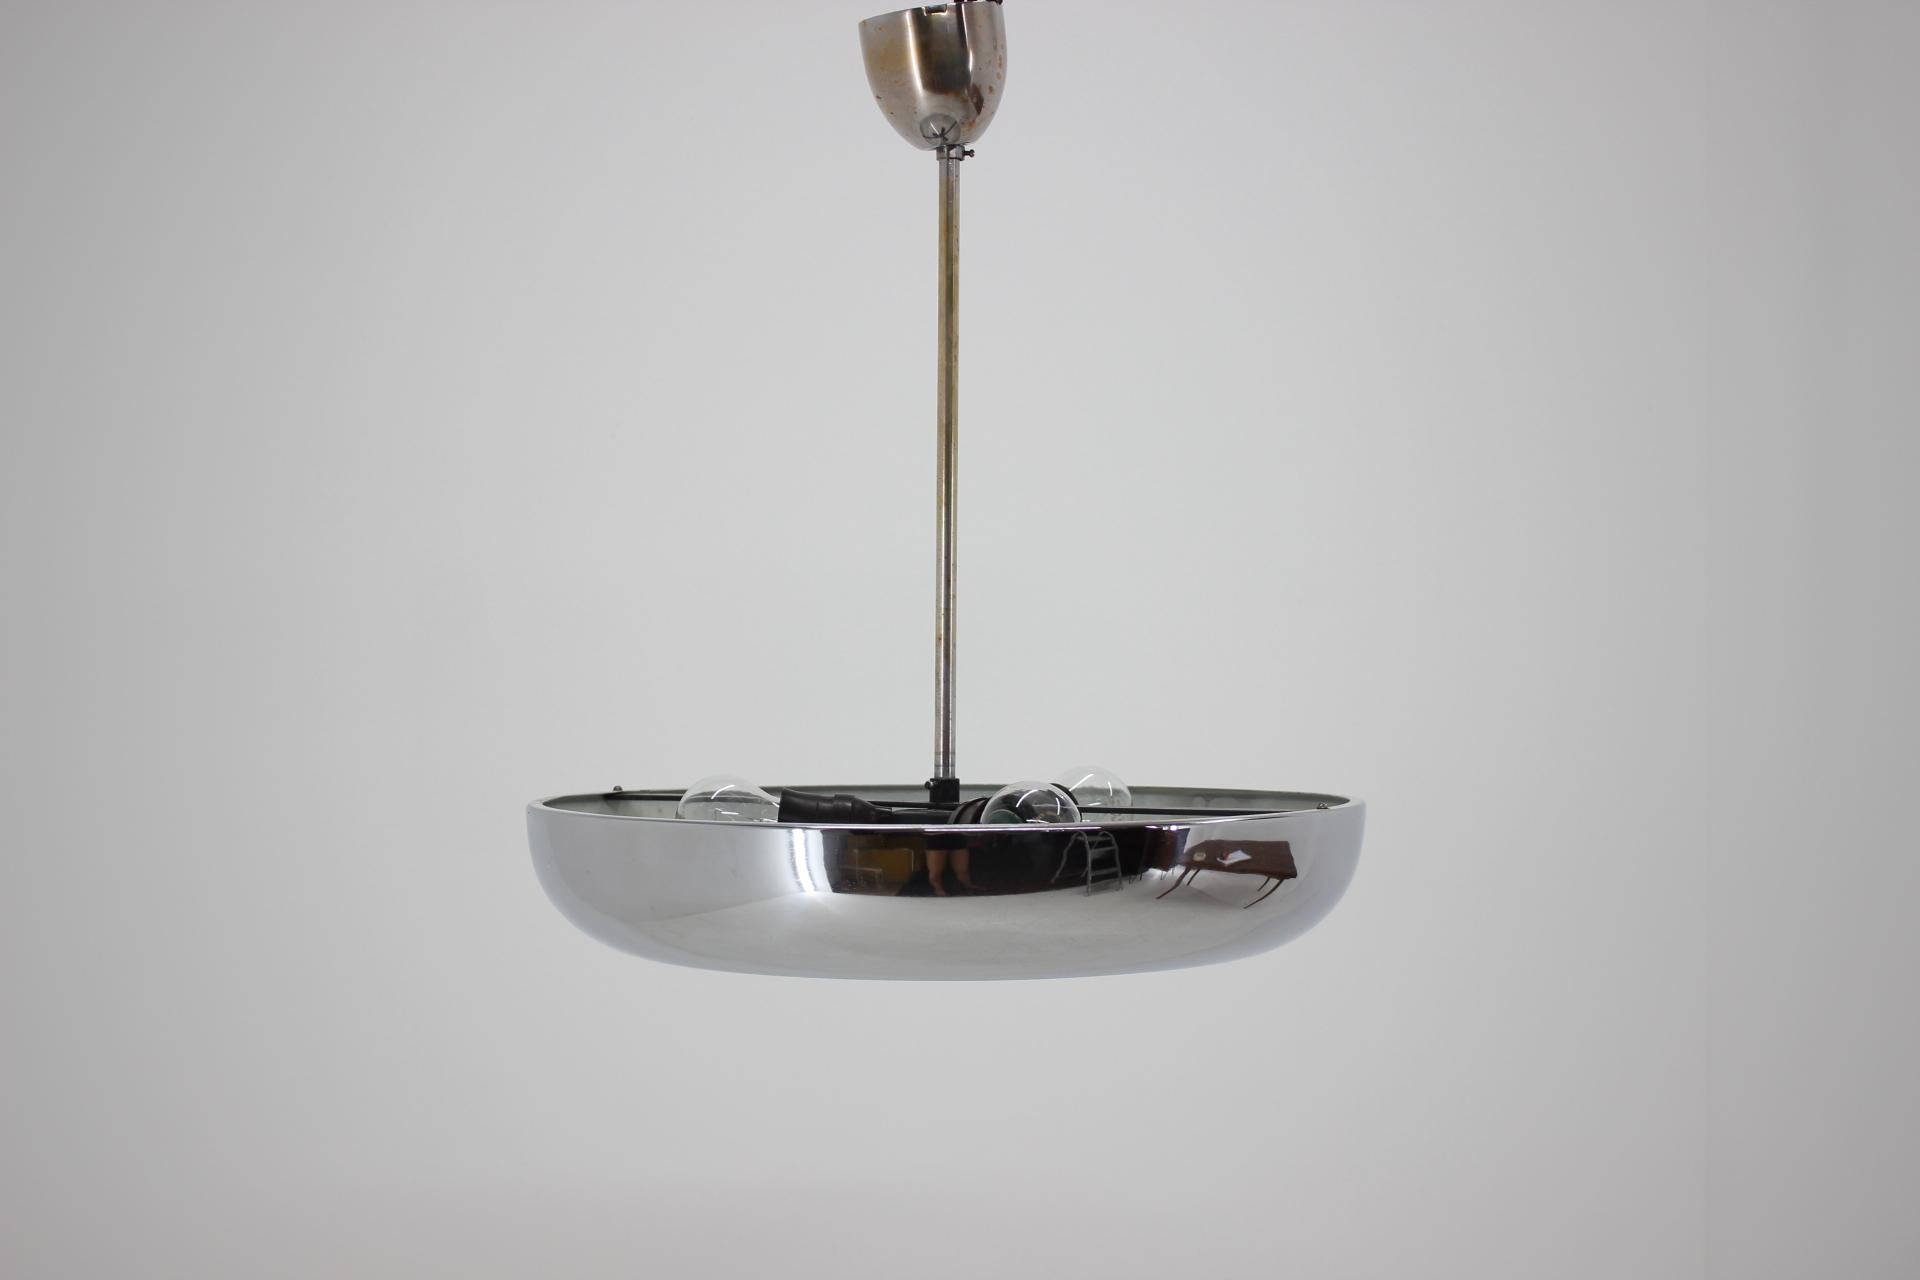 Bauhaus chrome pendant lamp. Fully functional, re-polished.